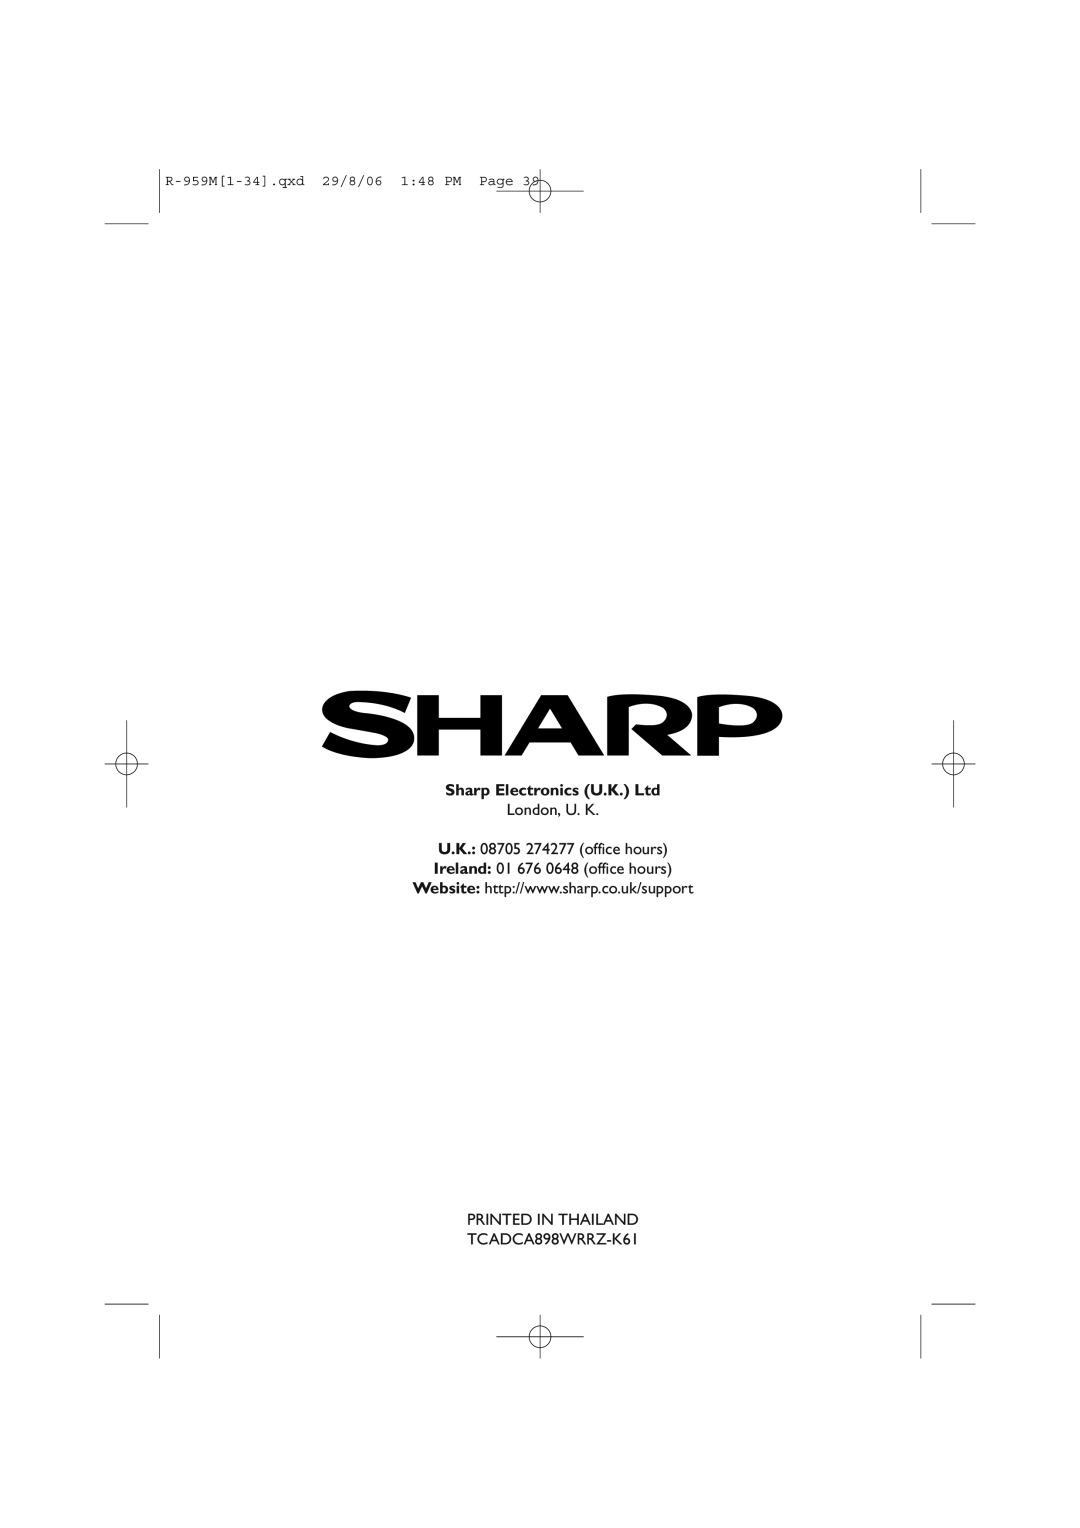 Sharp R-959M, R-98STM-A operation manual London, U. K U.K. 08705 274277 office hours, Ireland 01 676 0648 office hours 